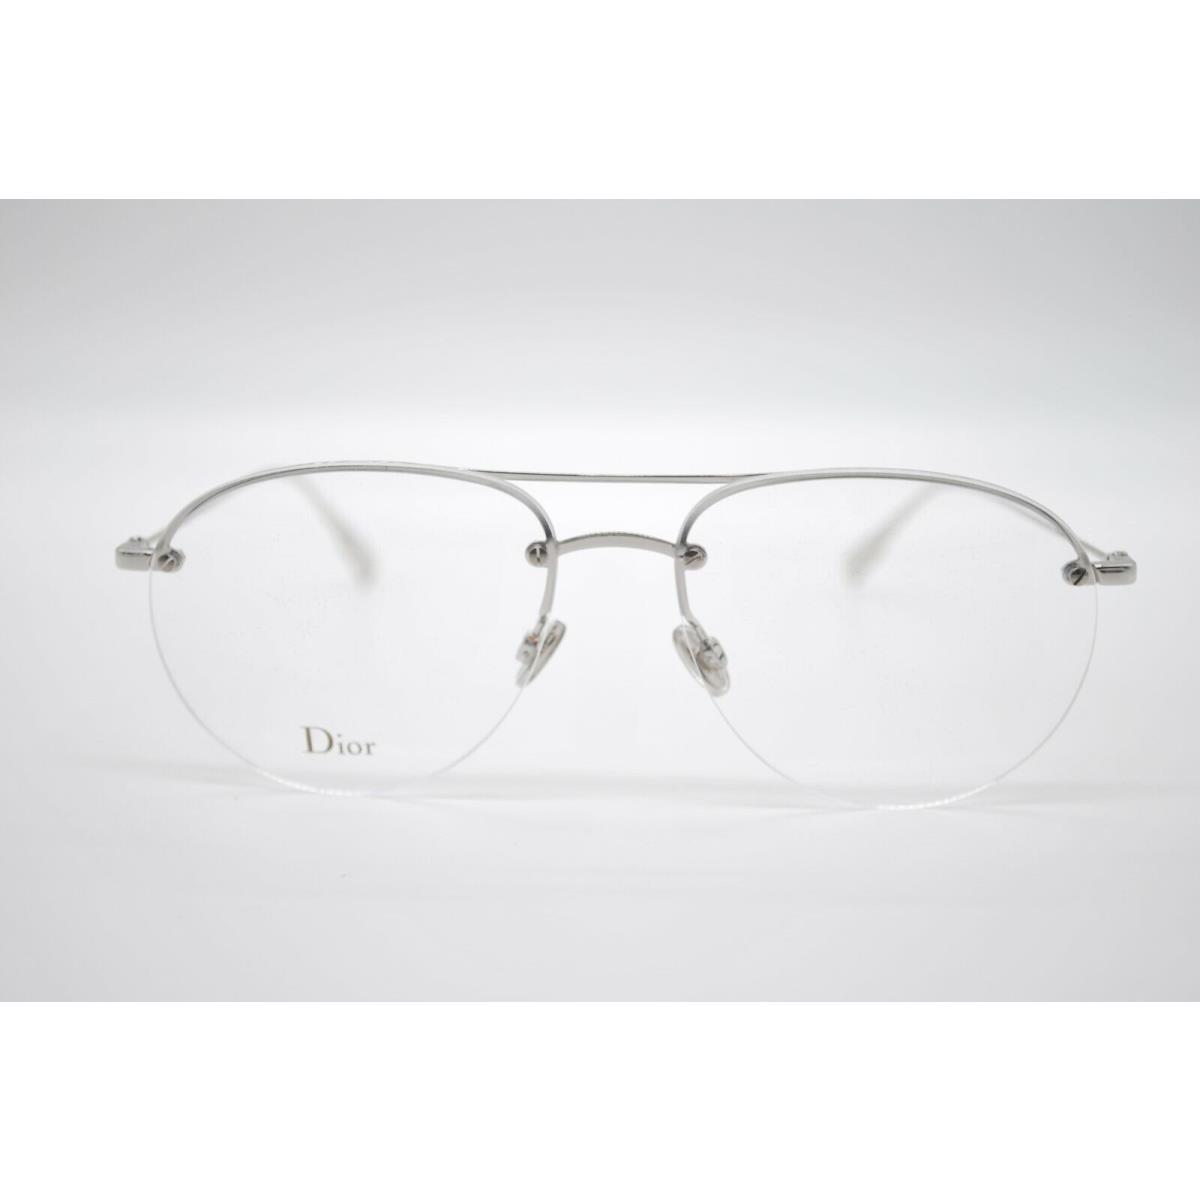 Dior eyeglasses  - SILVER Frame 1